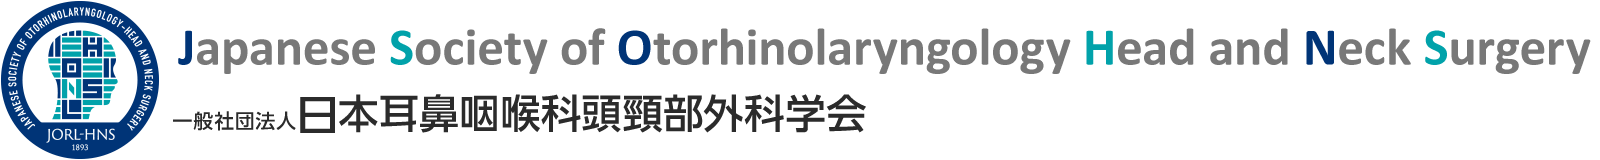 Japanese Society of Otorhinolaryngology-Head and Neck Surgery, Inc